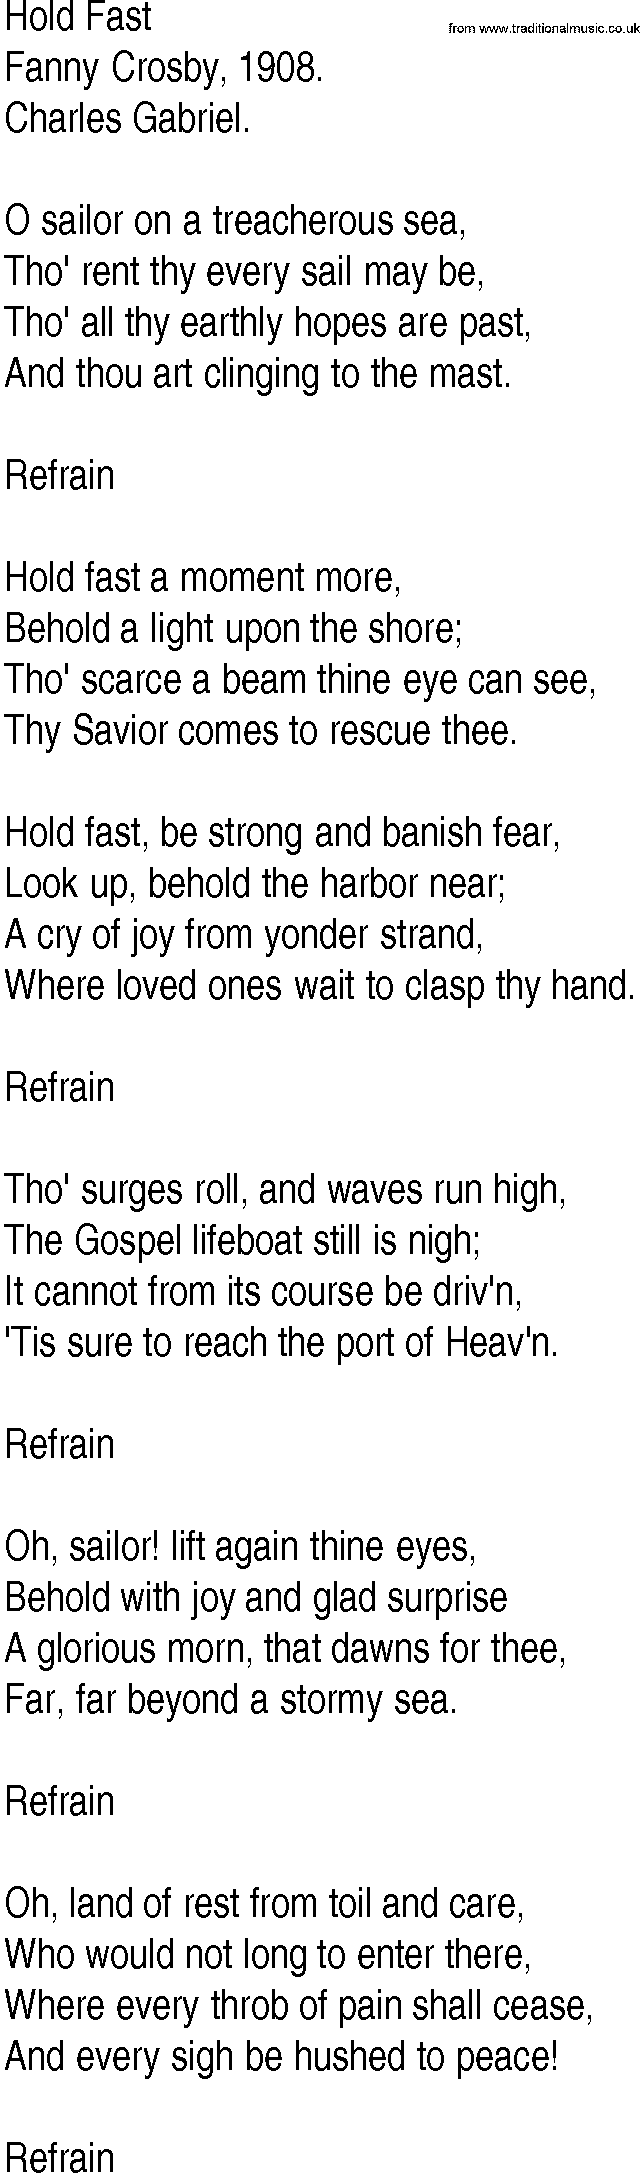 Hymn and Gospel Song: Hold Fast by Fanny Crosby lyrics